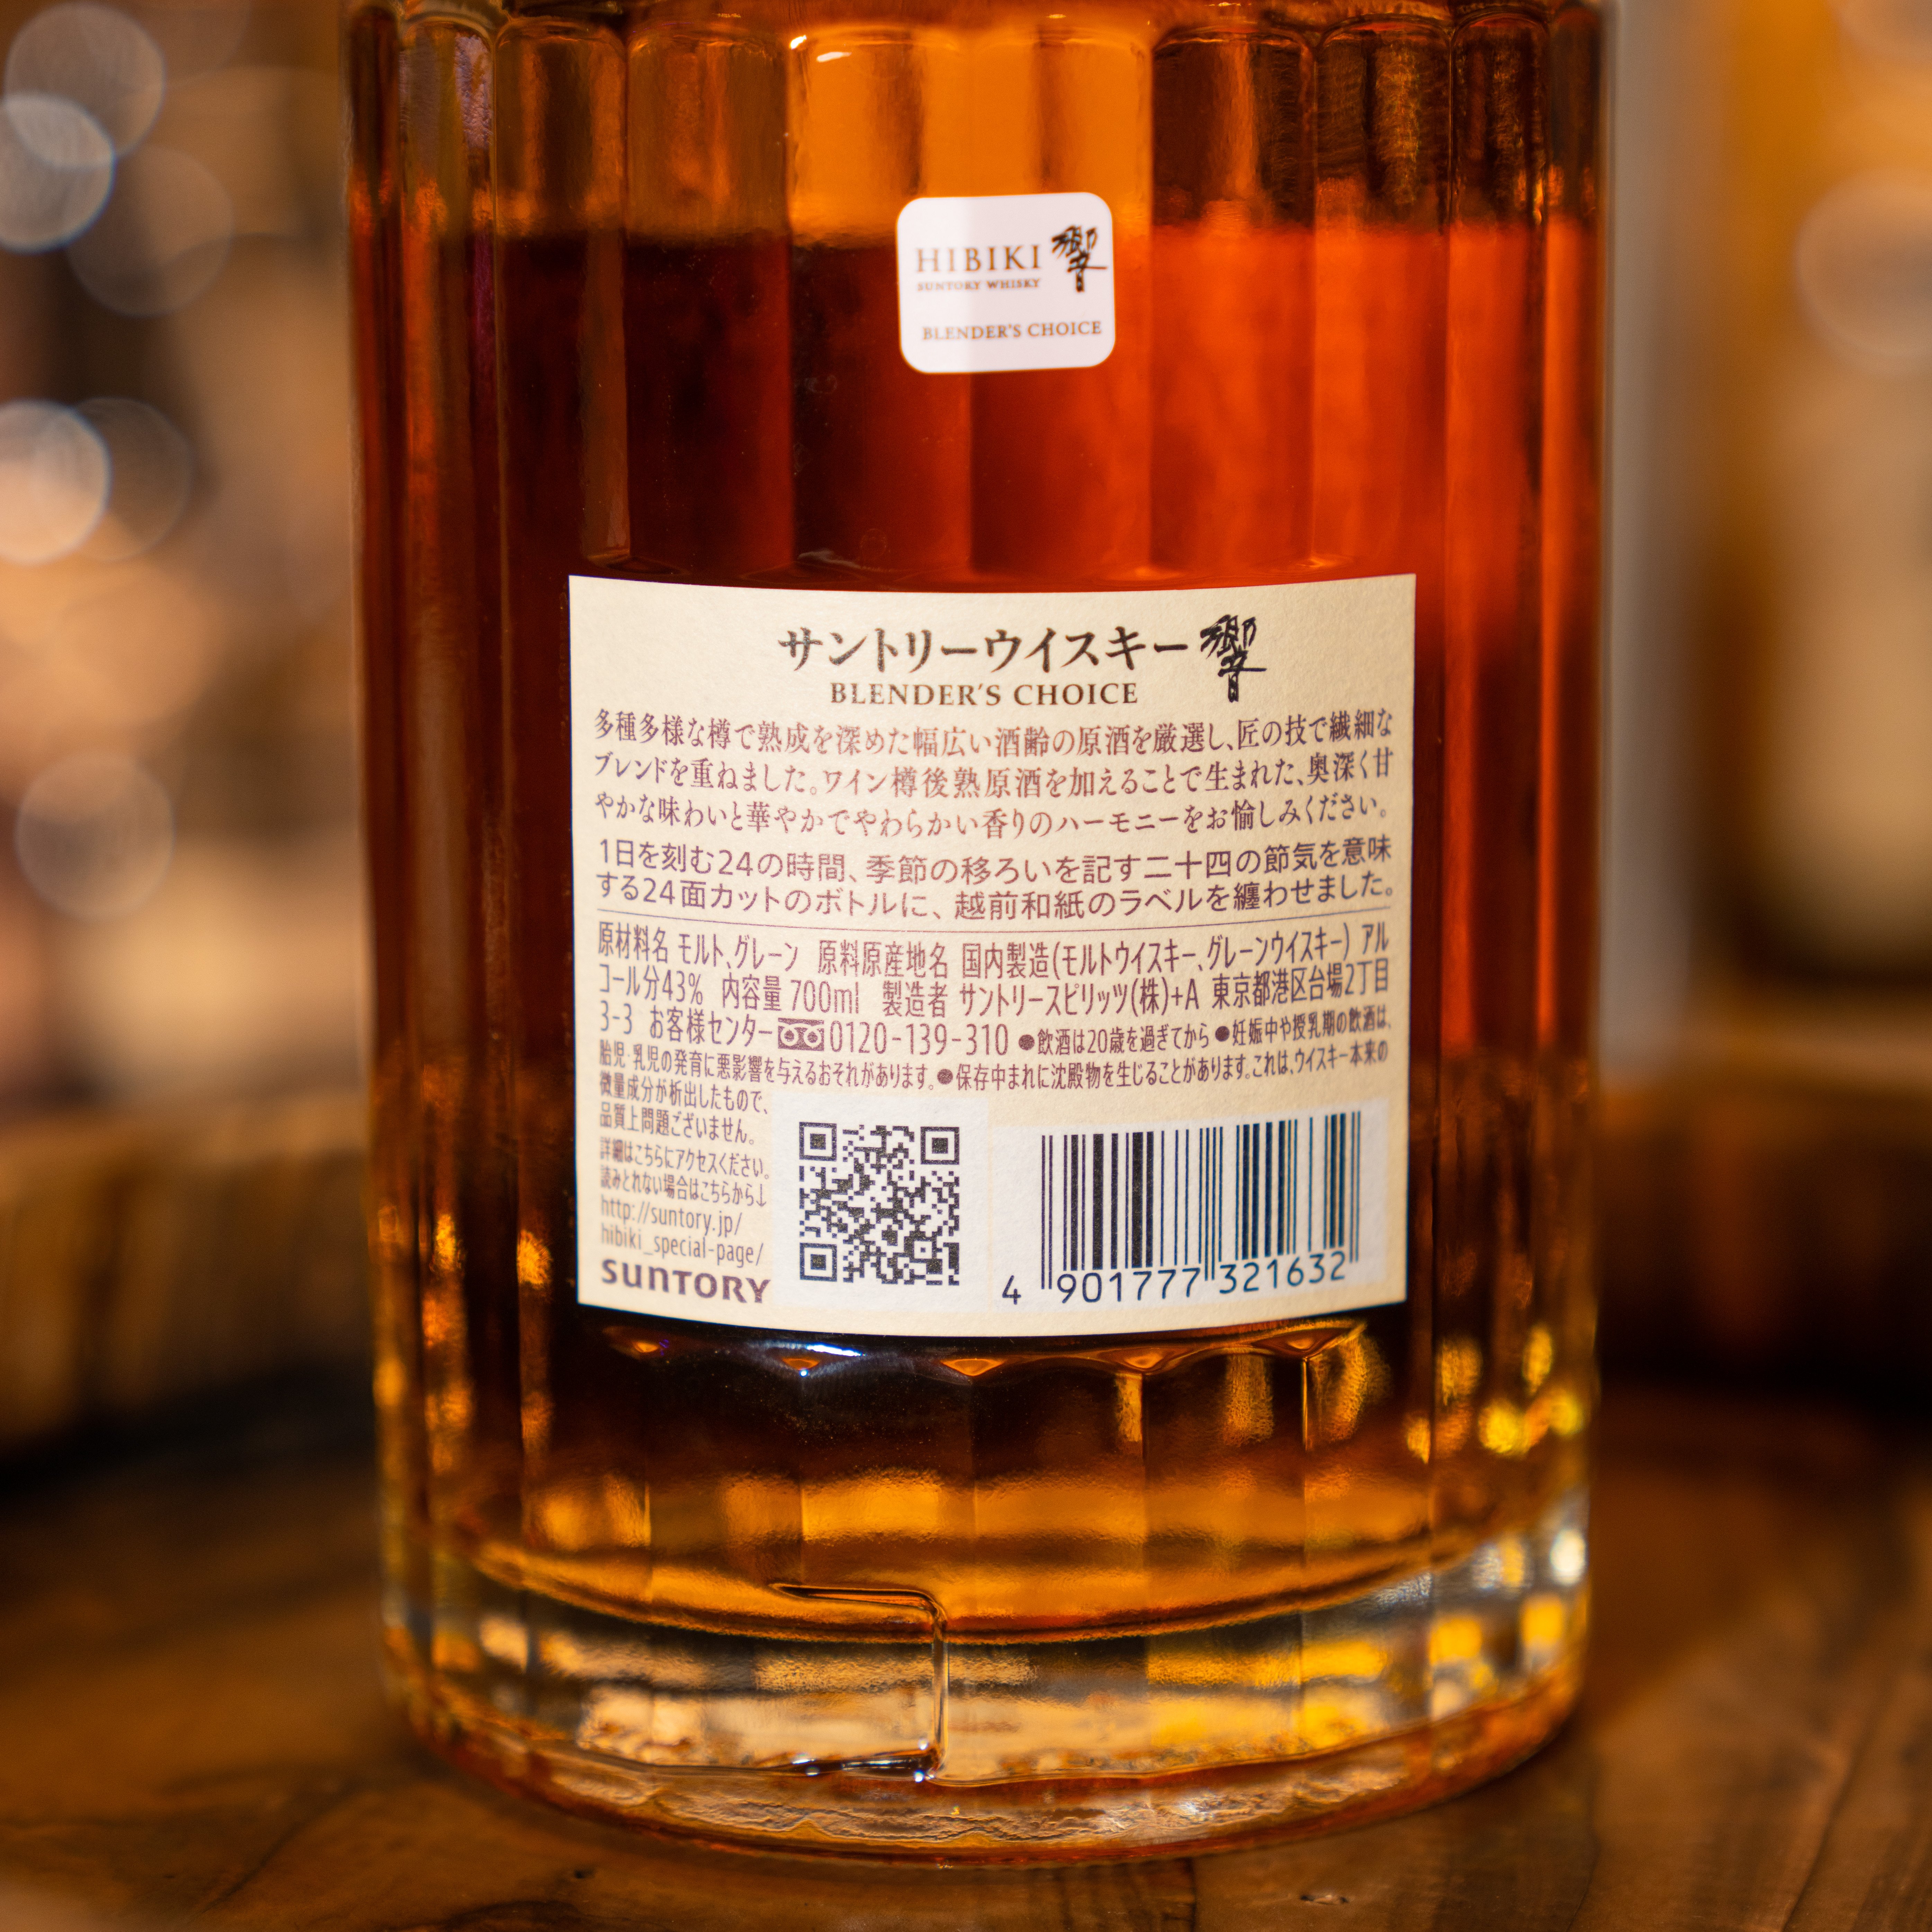 響 Hibiki Blender's Choice Blended Whisky